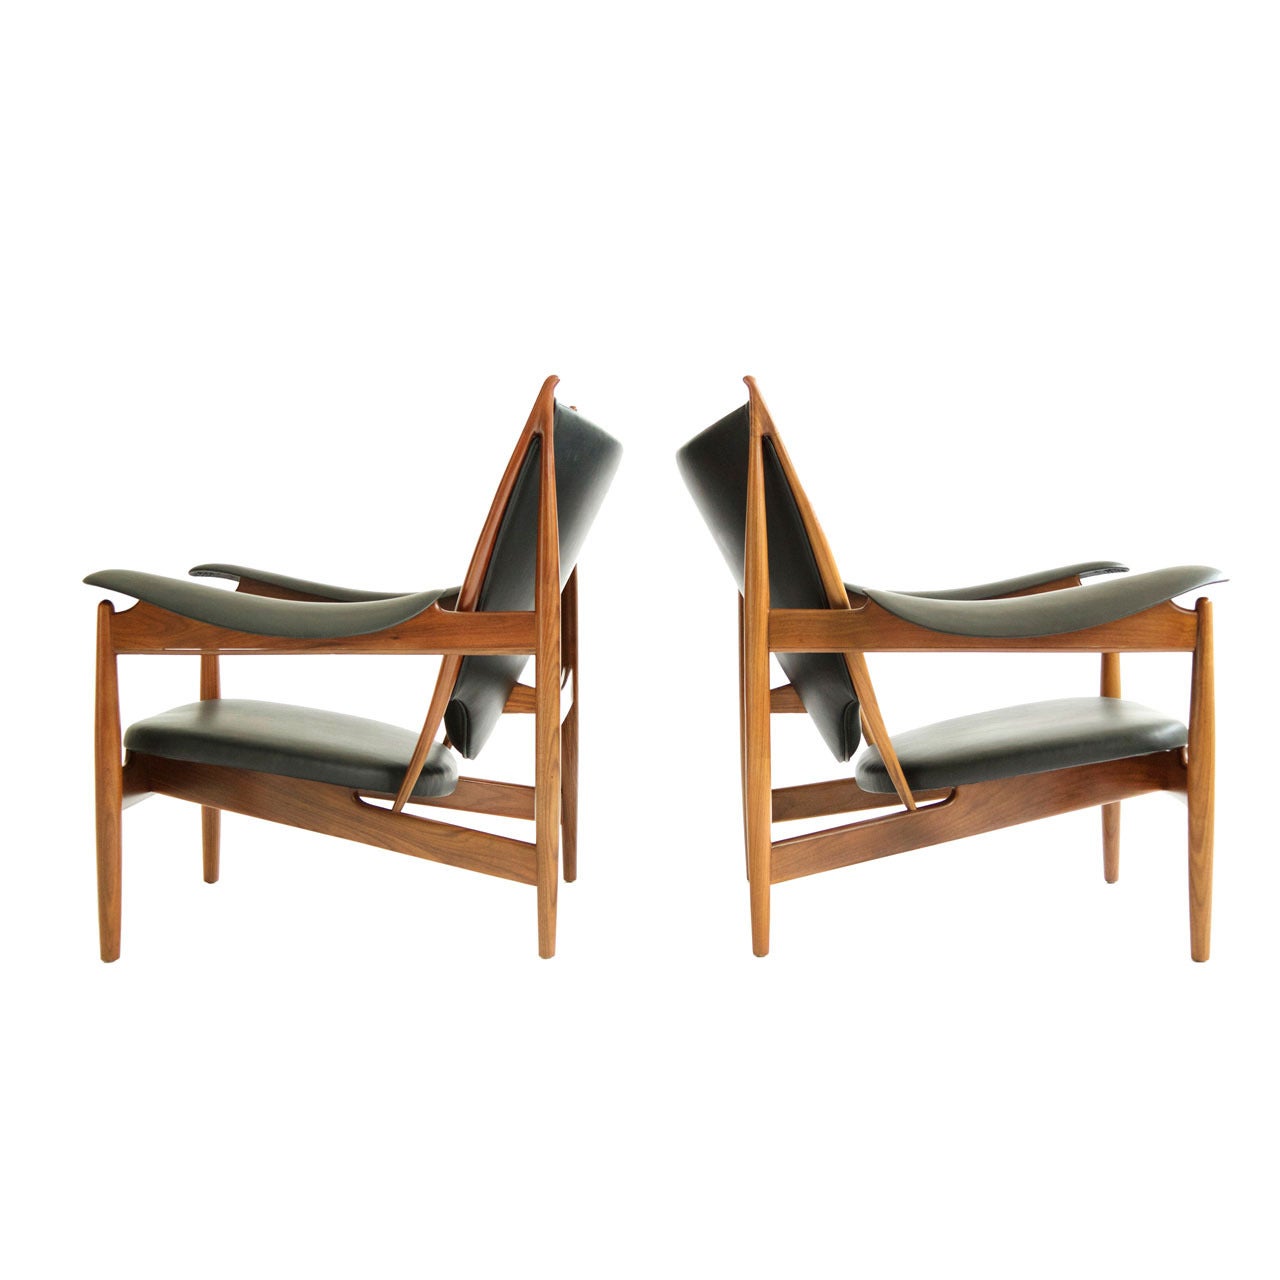 Finn Juhl Chieftan Lounge Chairs, circa 1999 in the style of Mid Century Modern